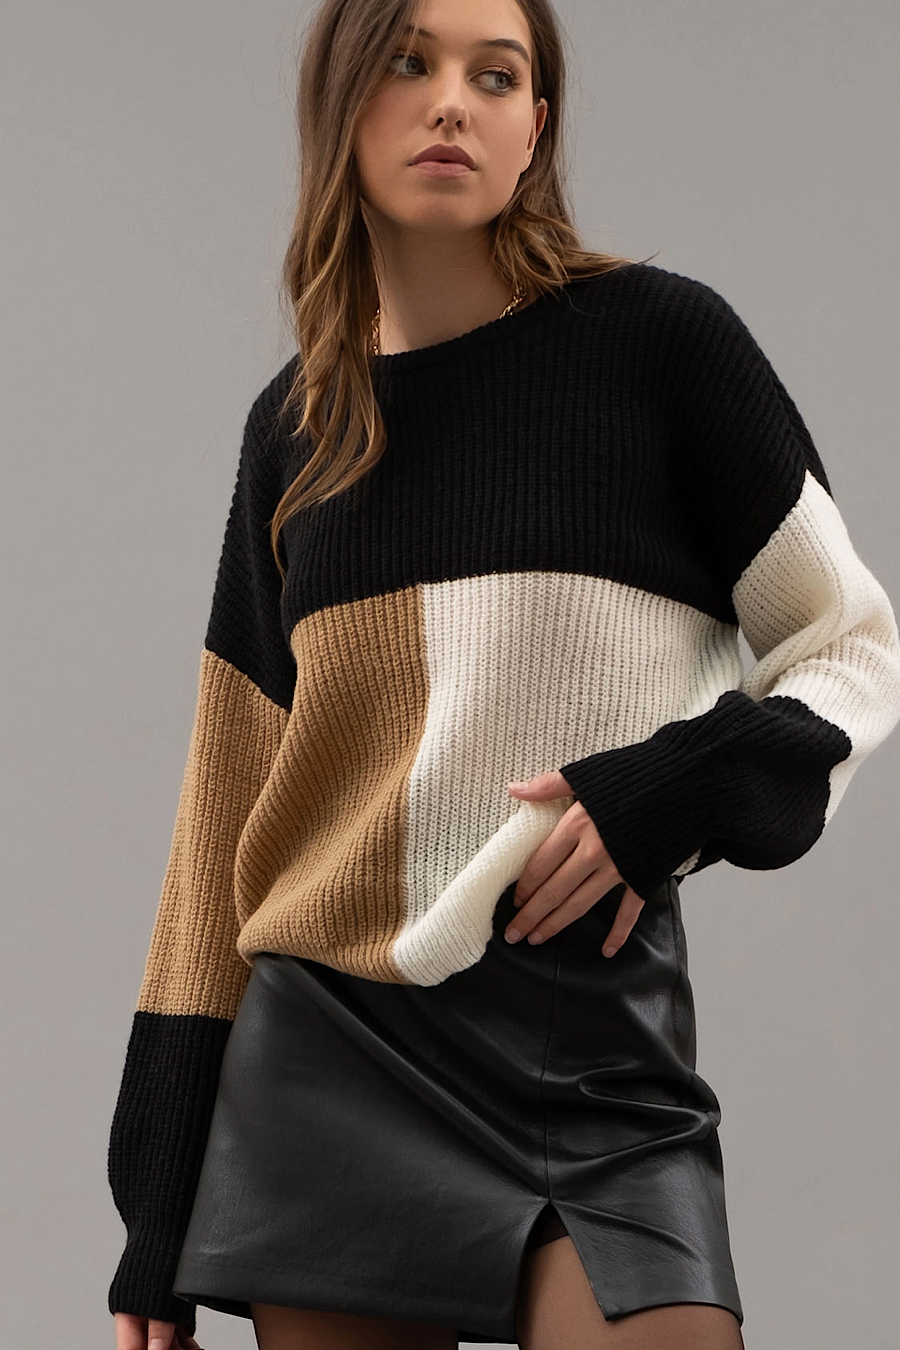 Devine Intervention Colorblock Sweater